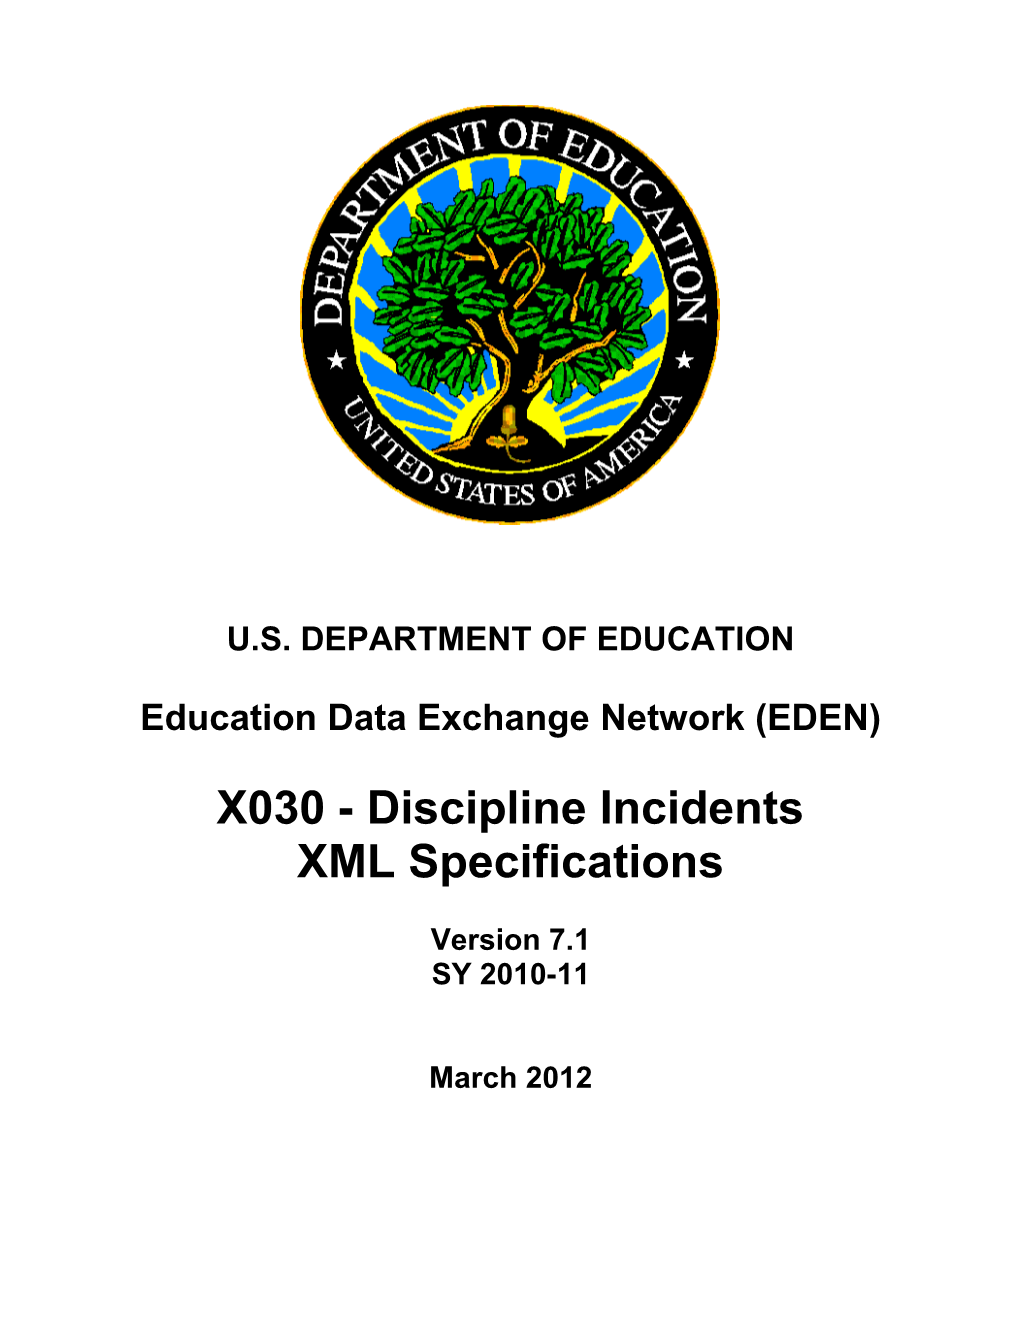 Discipline Incidents XML Specifications